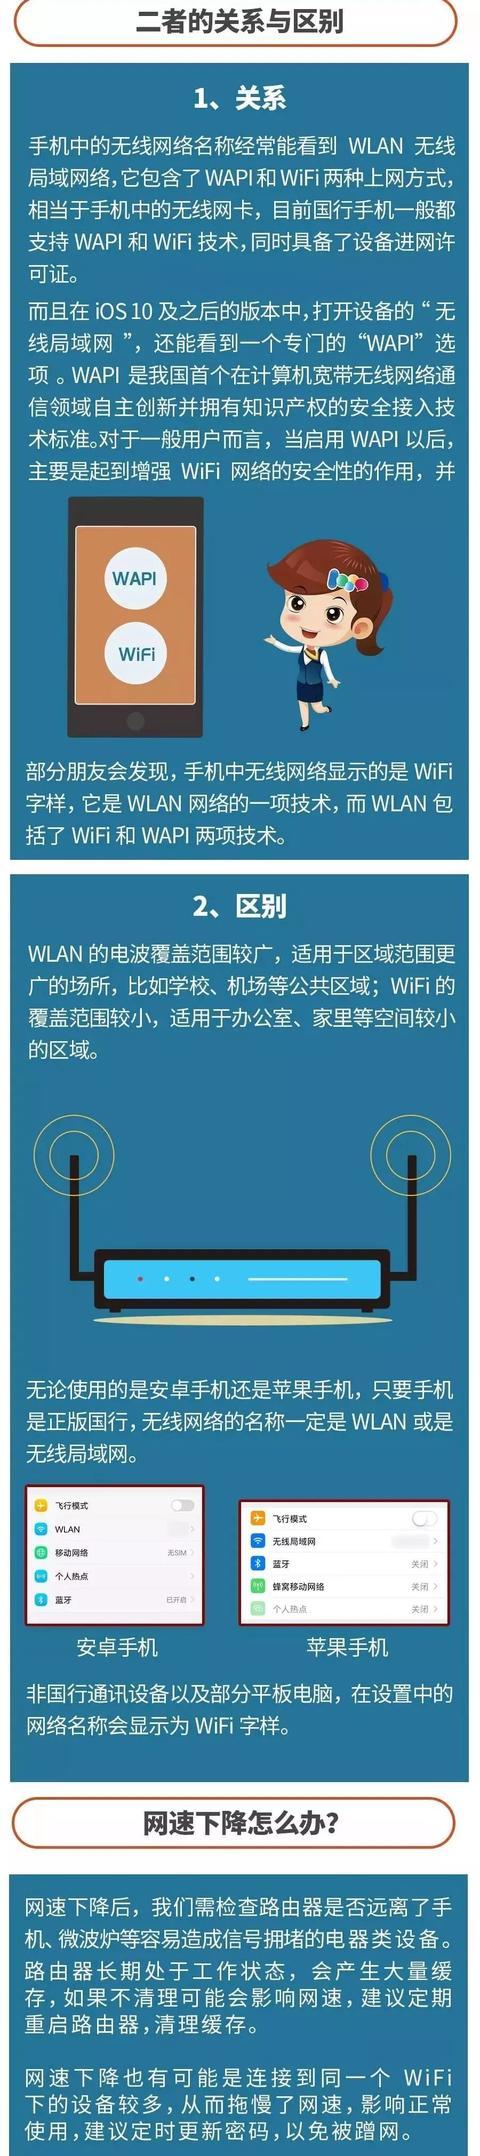 WiFi和WLAN傻傻分不清楚？别再搞混了